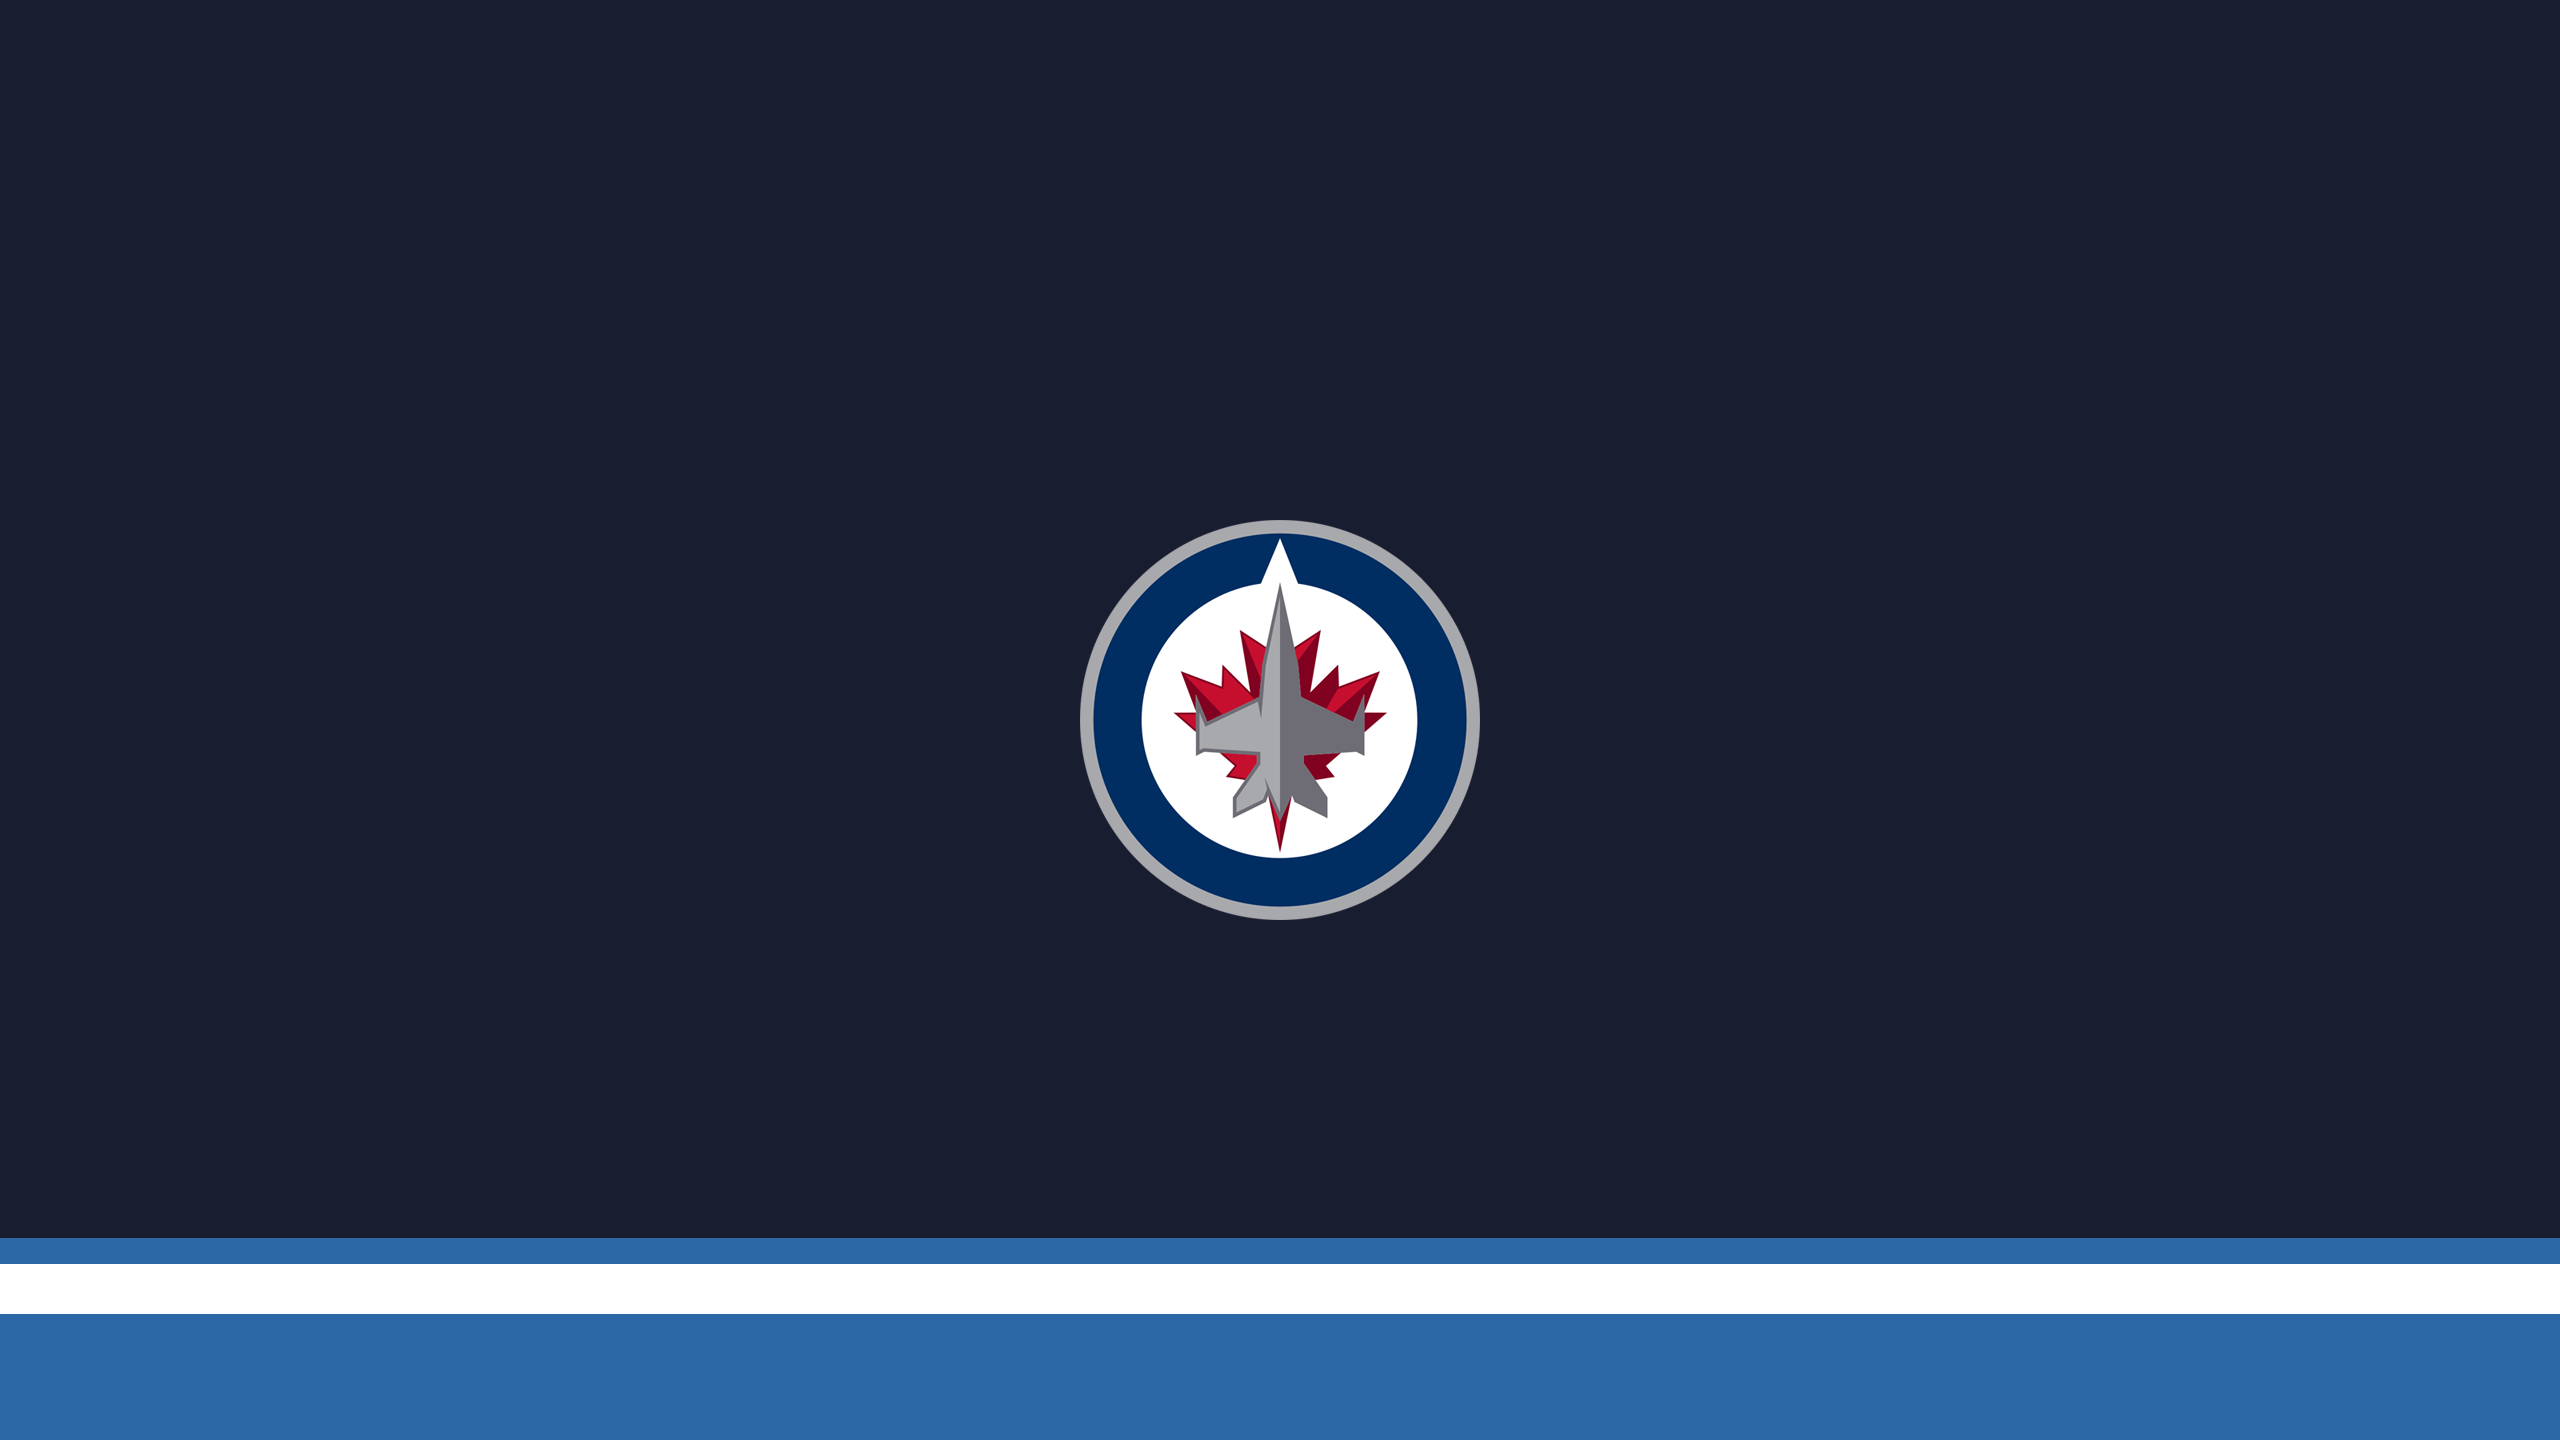 Winnipeg Jets - NHL - Square Bettor